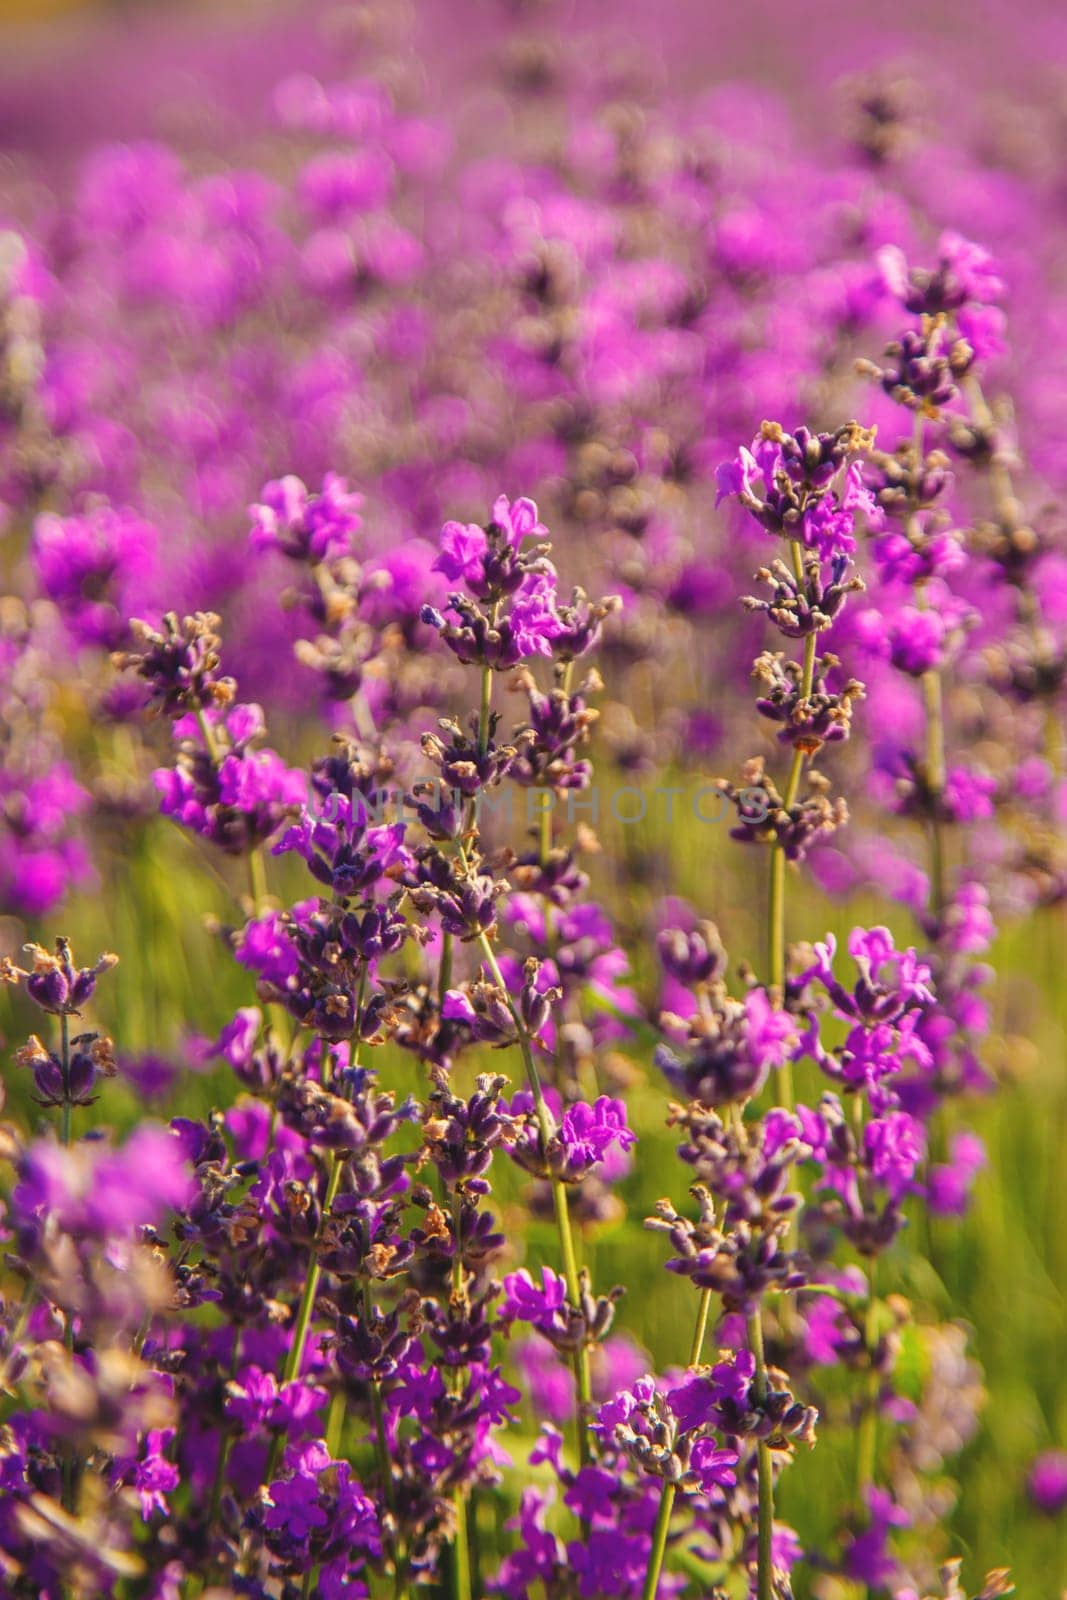 blooming lavender flowers on the field. Selective focus. by yanadjana